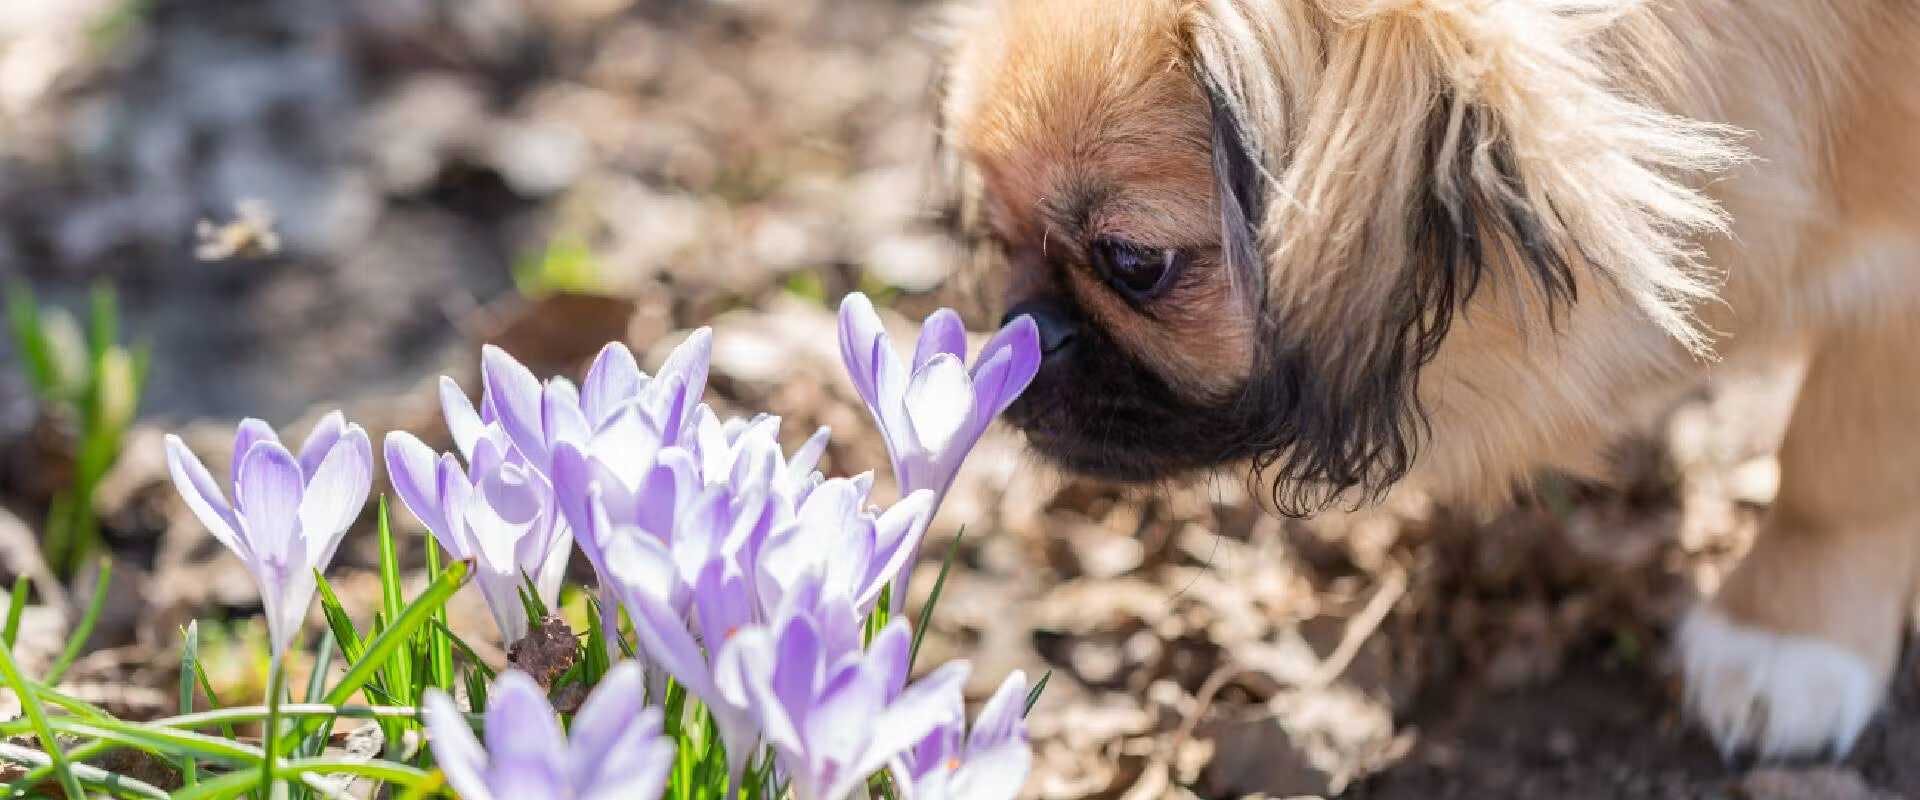 Pekingese dog sniffing crocus flowers